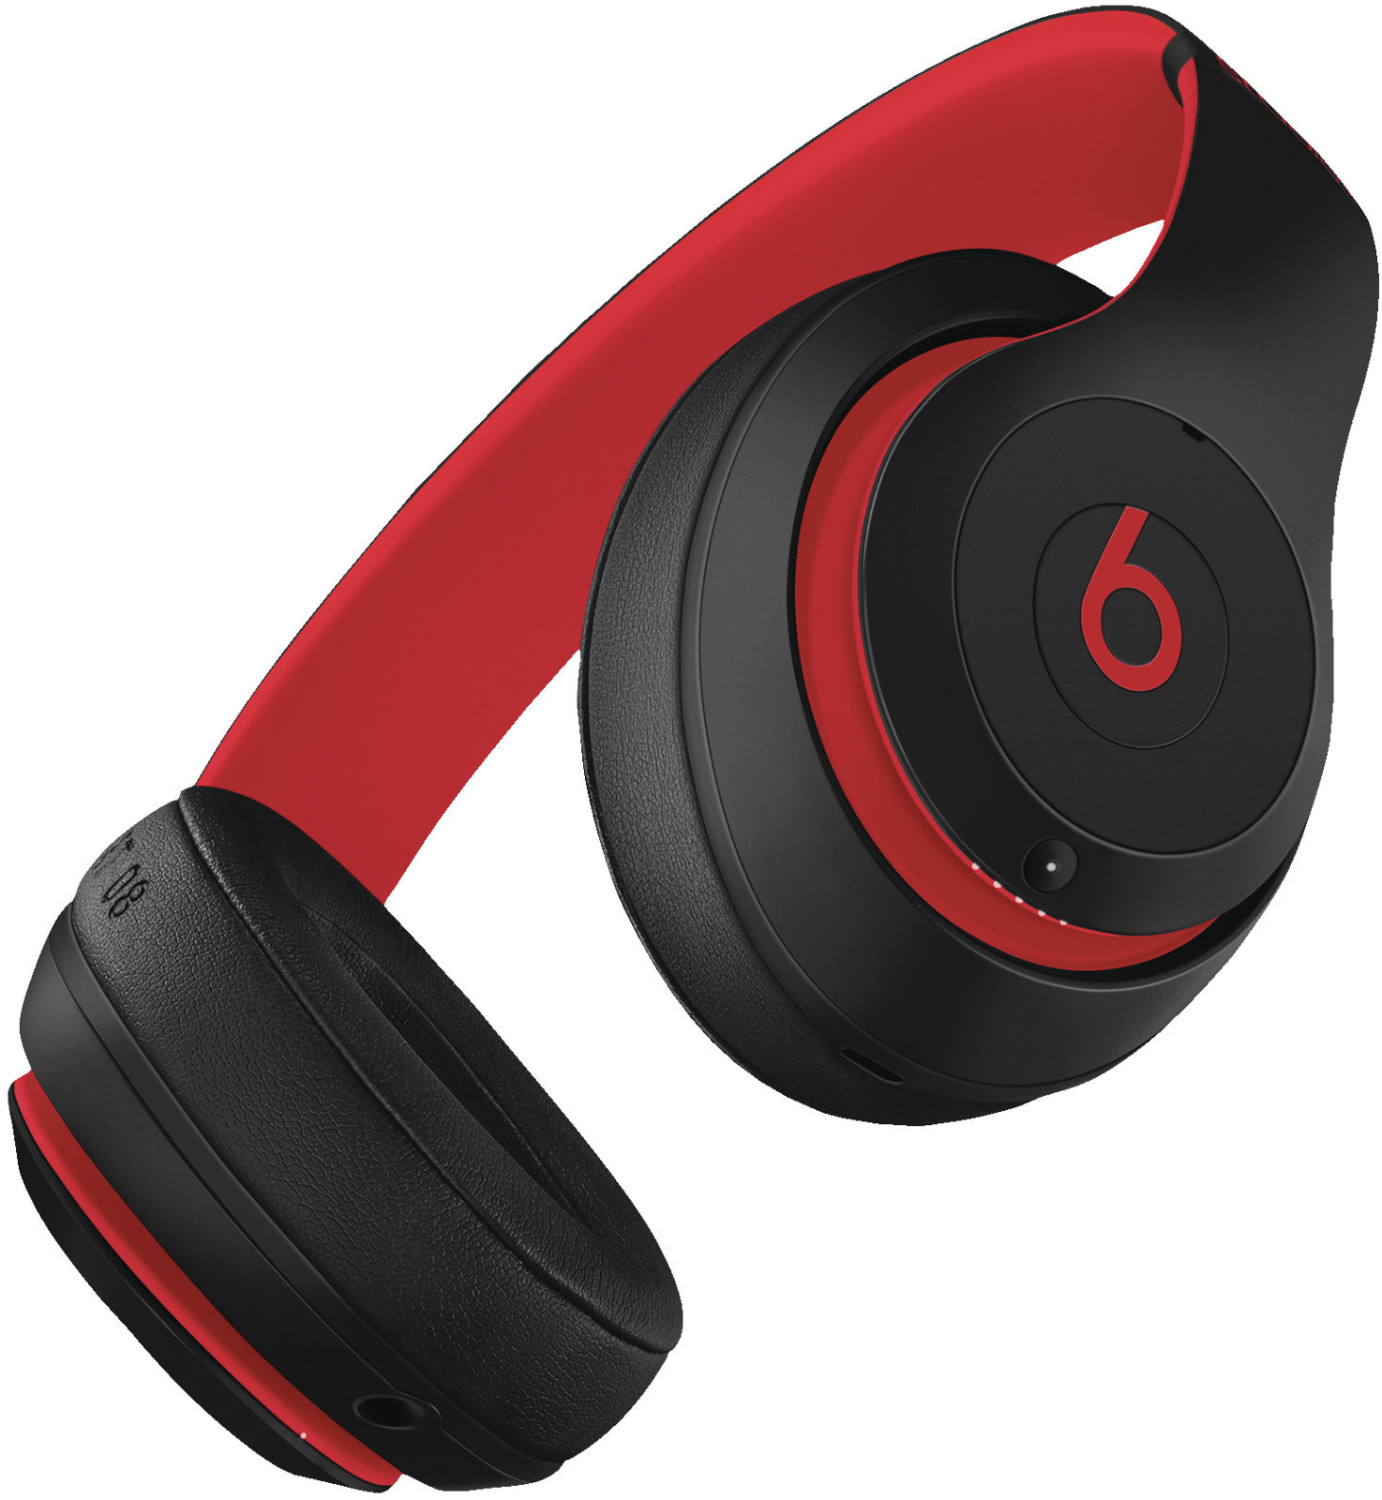 Buy Beats Dre Studio3 Wireless (Defiant Black-Red) from £204.99 (Today) – Best Deals idealo.co.uk